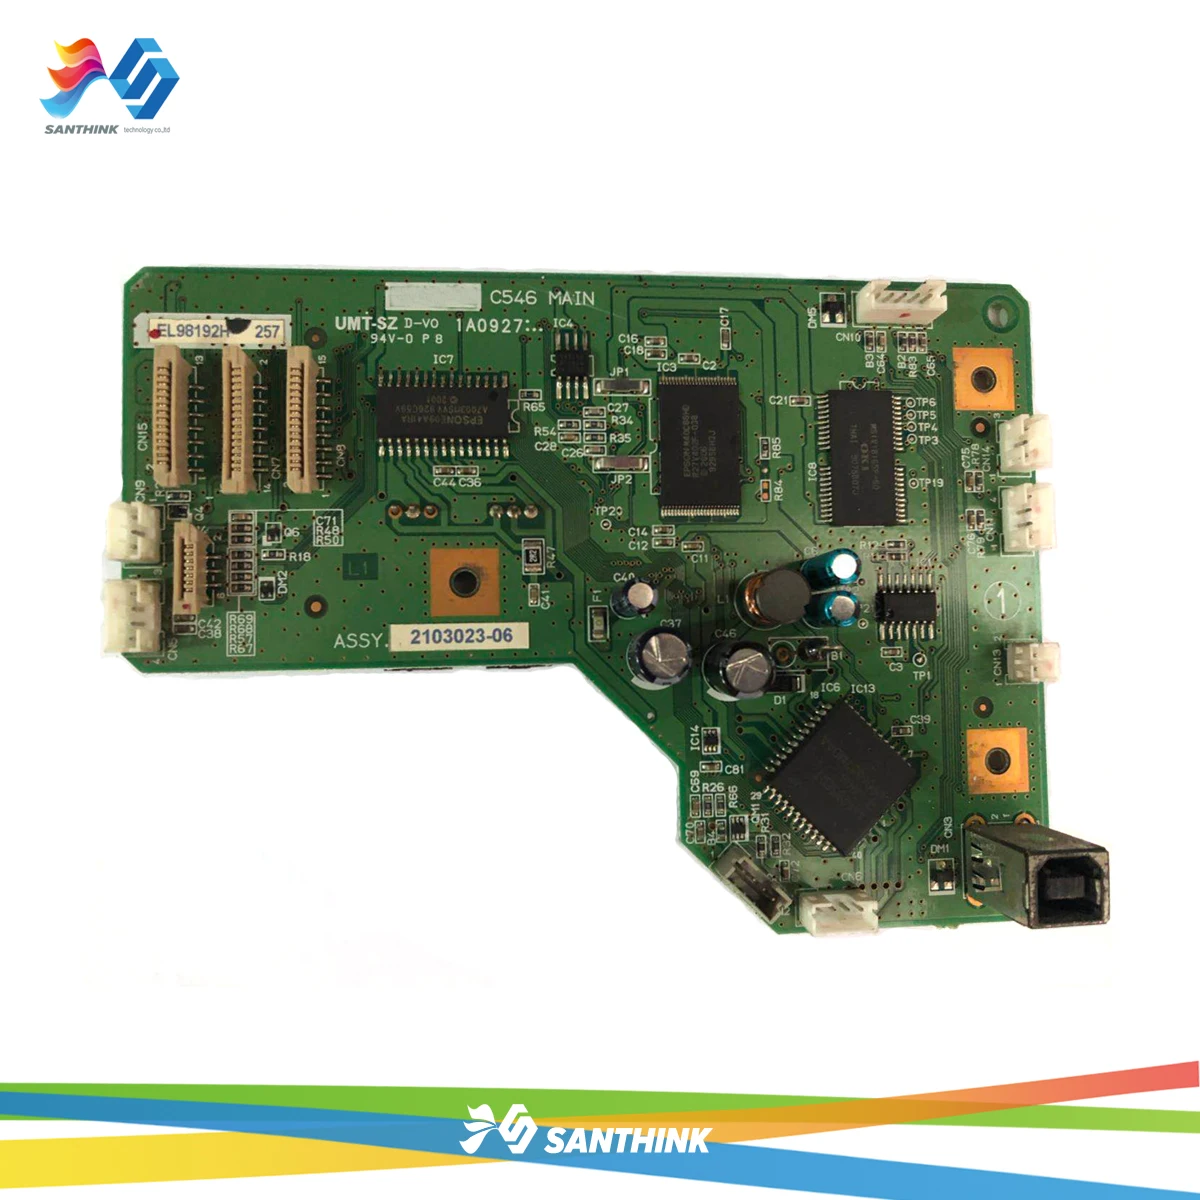 

Used MAIN BOARD for EPSON R230 R200 R210 R200 MAIN BOARD motherboard interface board